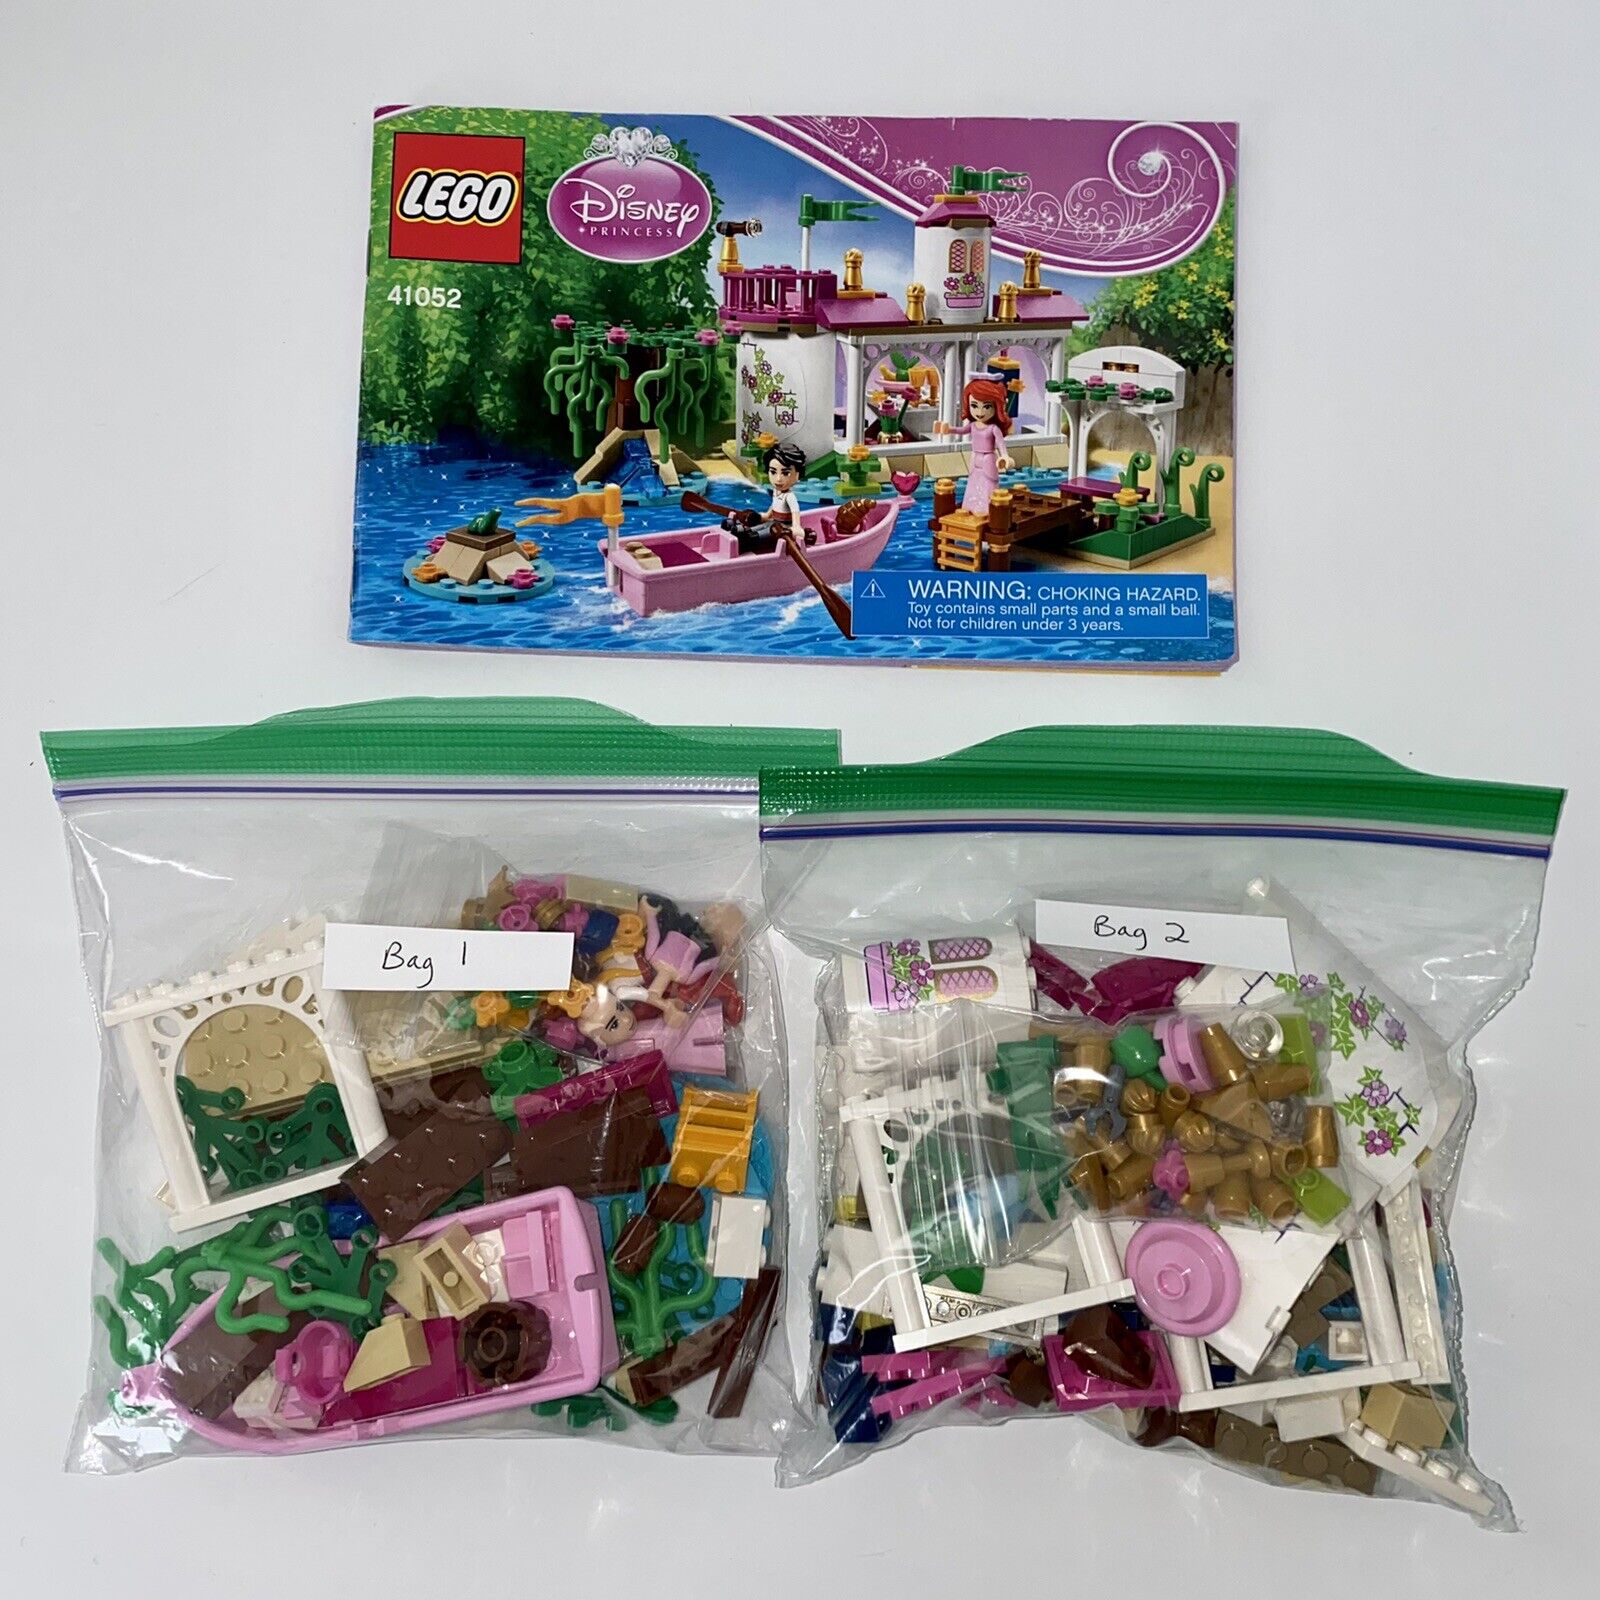 Lego Disney Princess 41052 Ariel’s Magical Kiss Complete Little Mermaid Eric